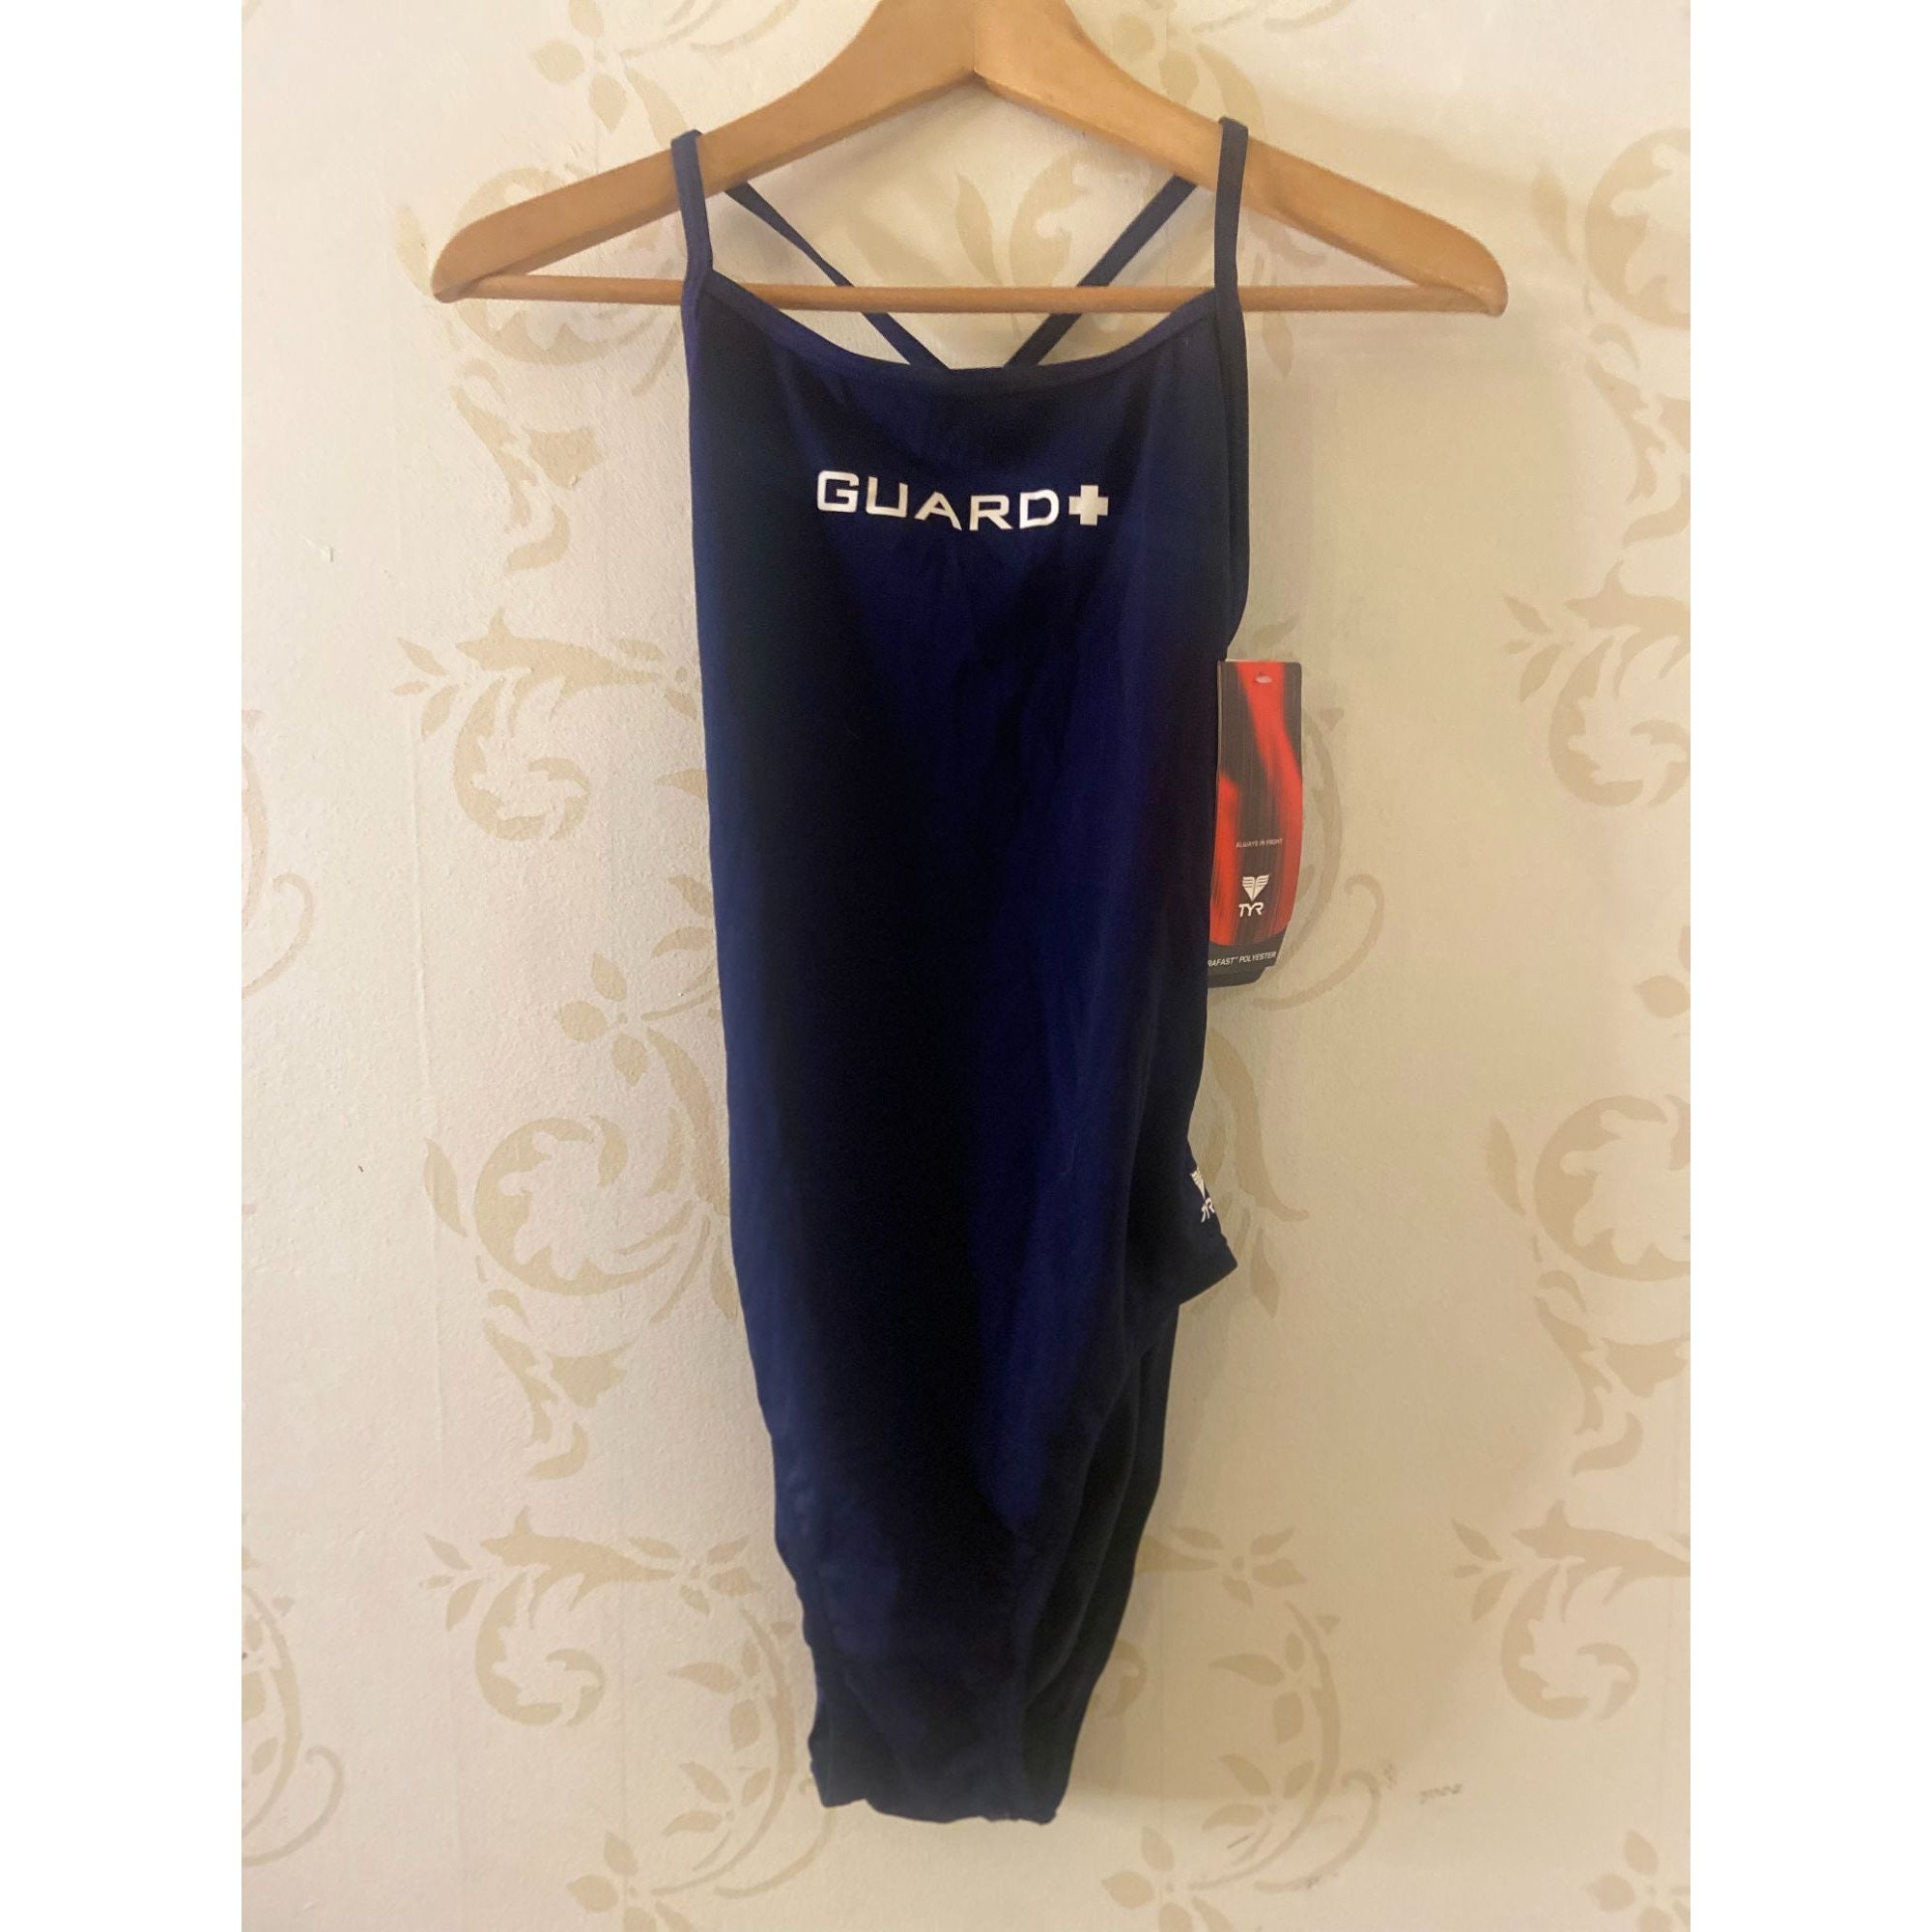 HIRO GATO Swimsuit 'sirius A' Poseidon Blue Swimming Suit Japan